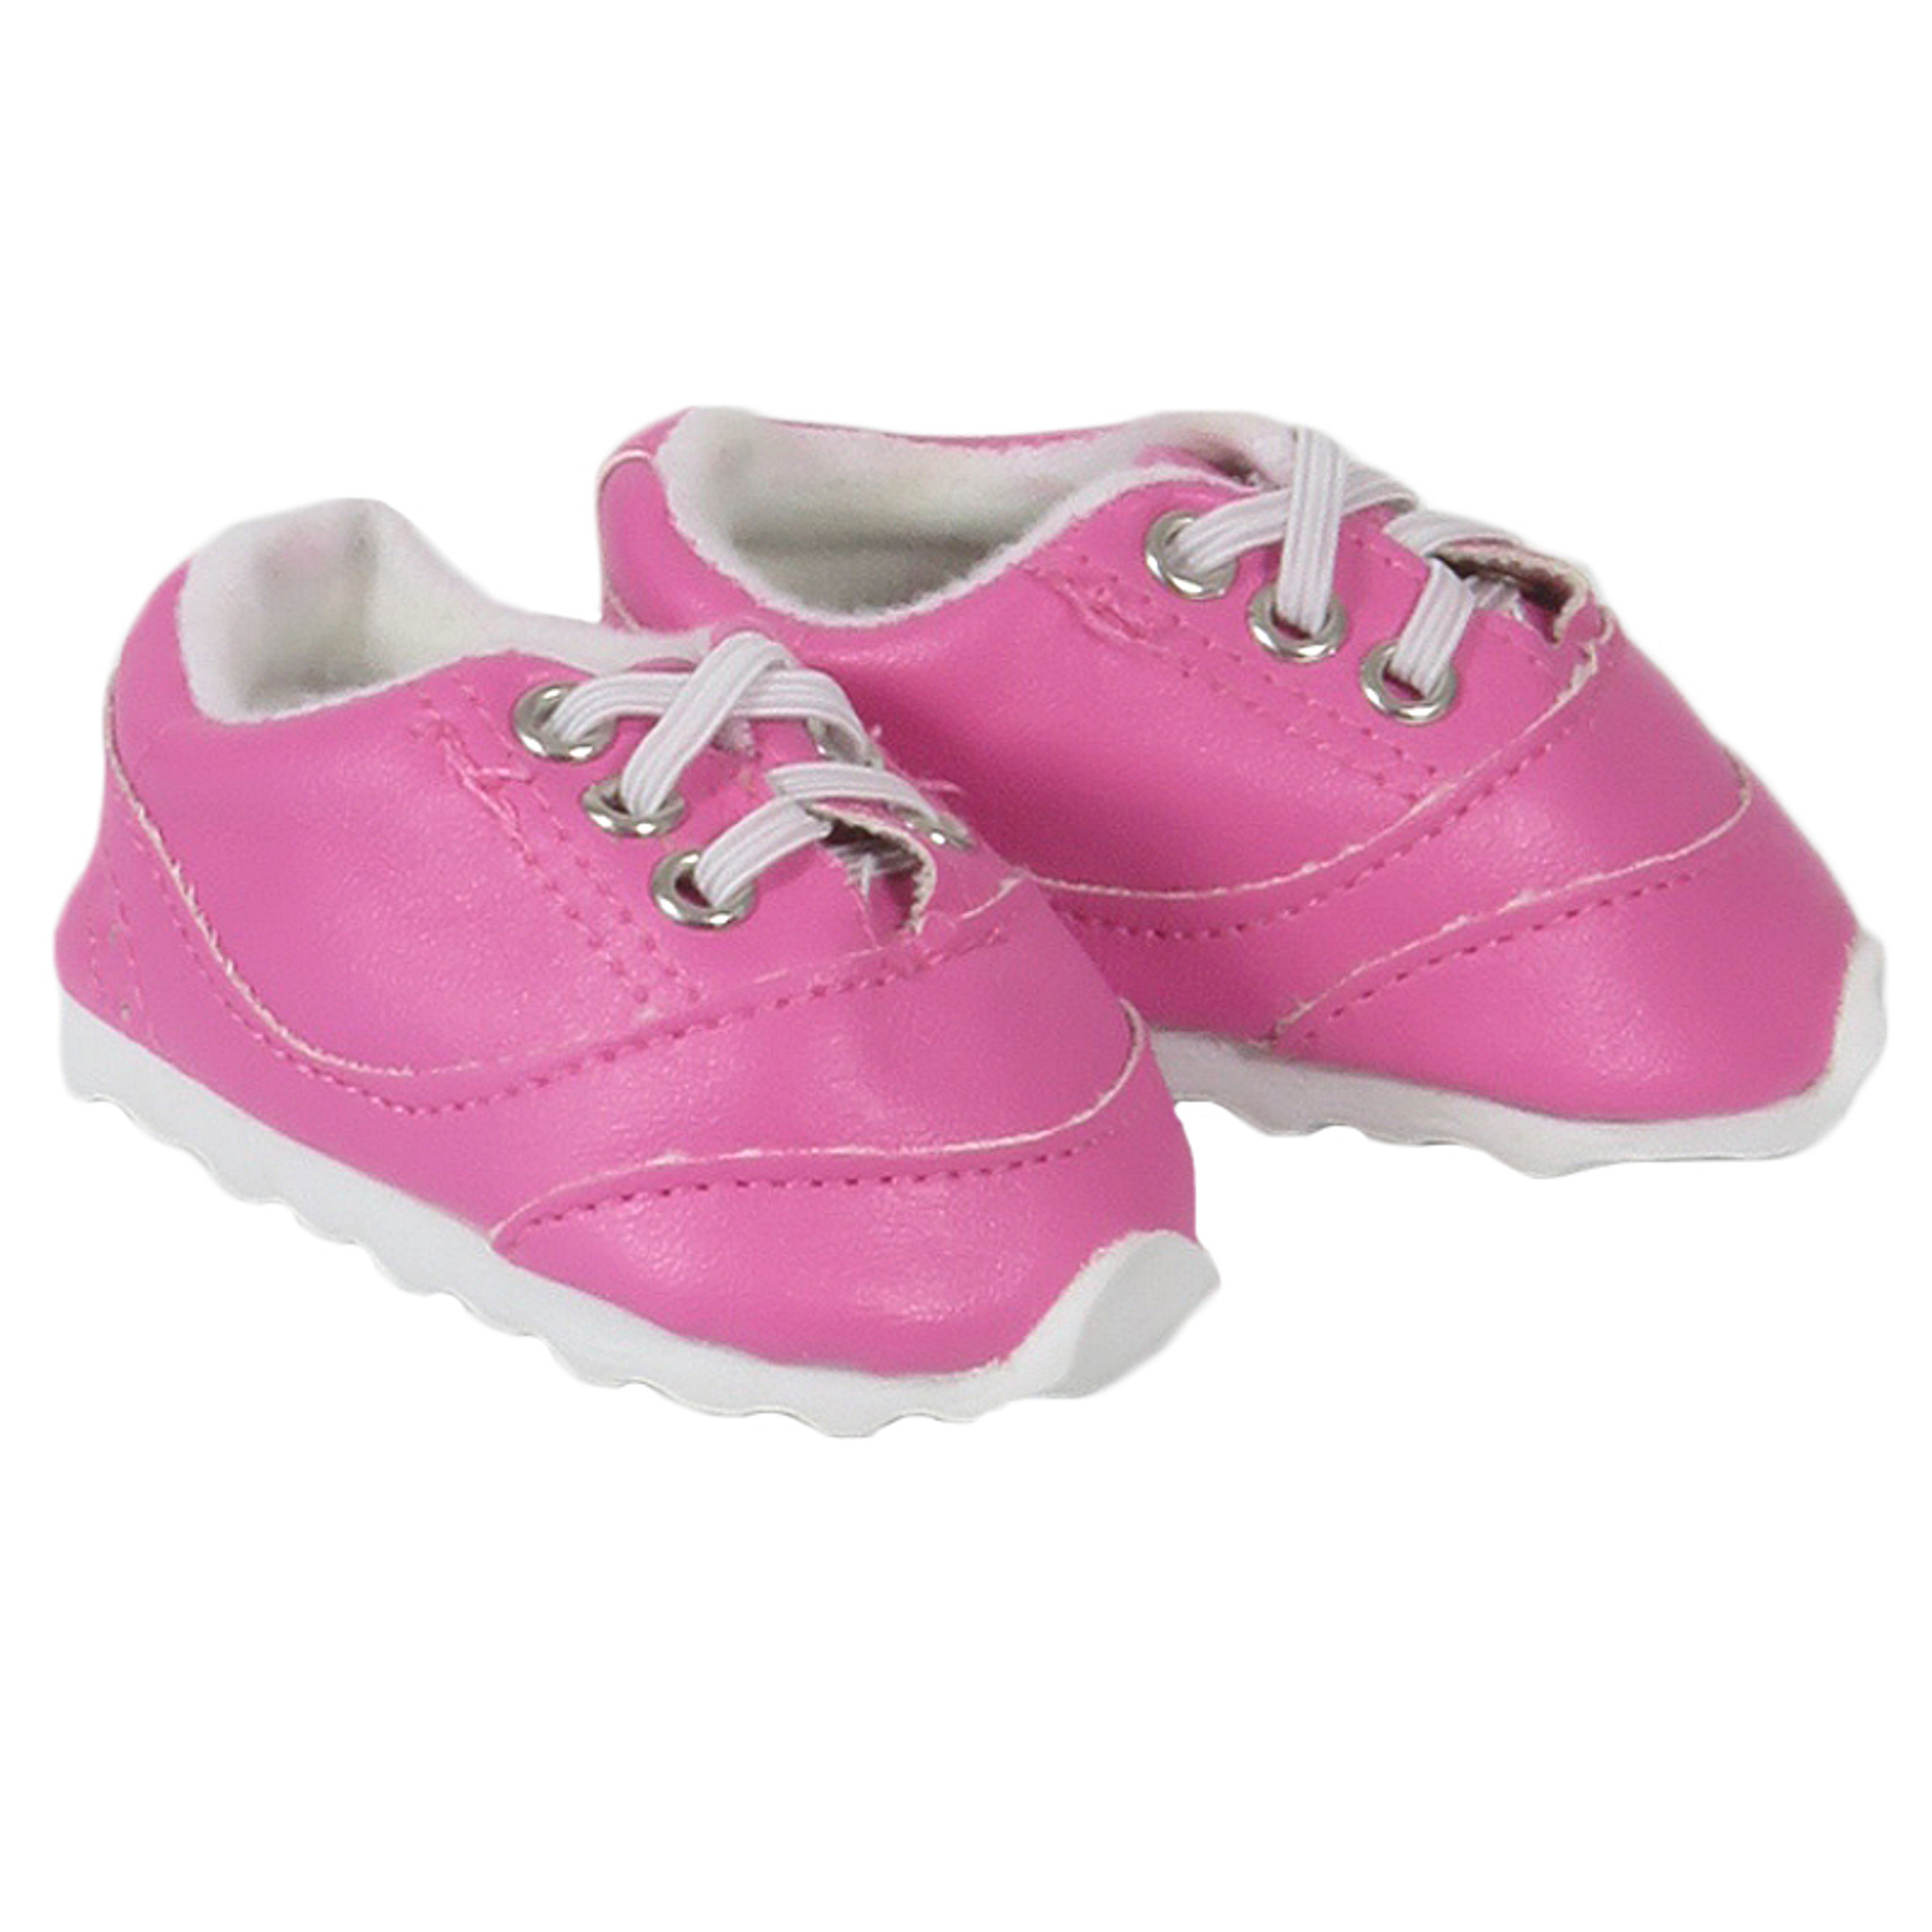 sneakers hot pink